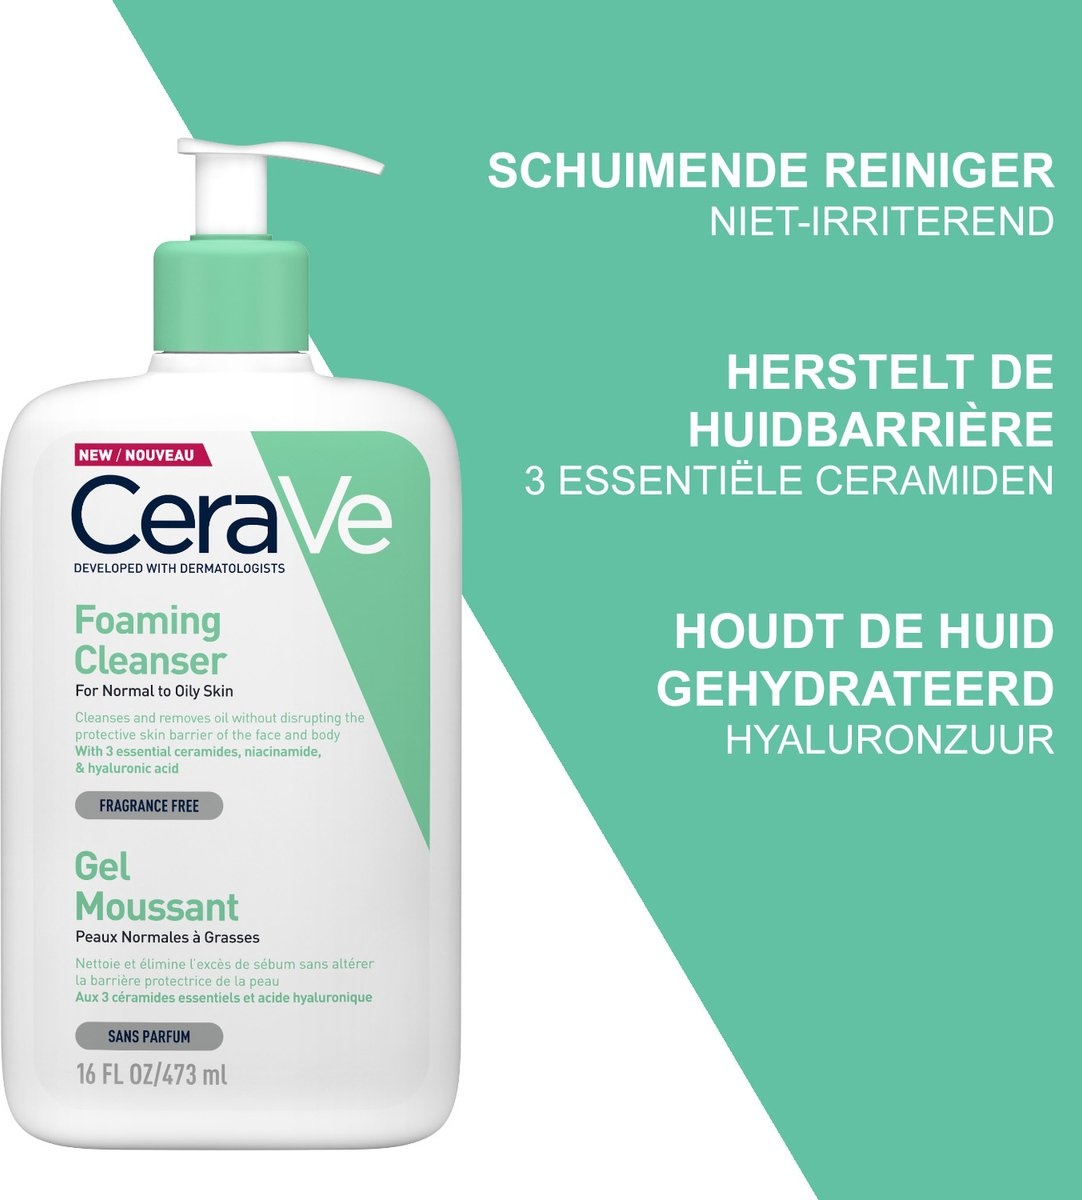 CeraVe - Foaming Cleanser - voor normale tot vette huid - 236ml